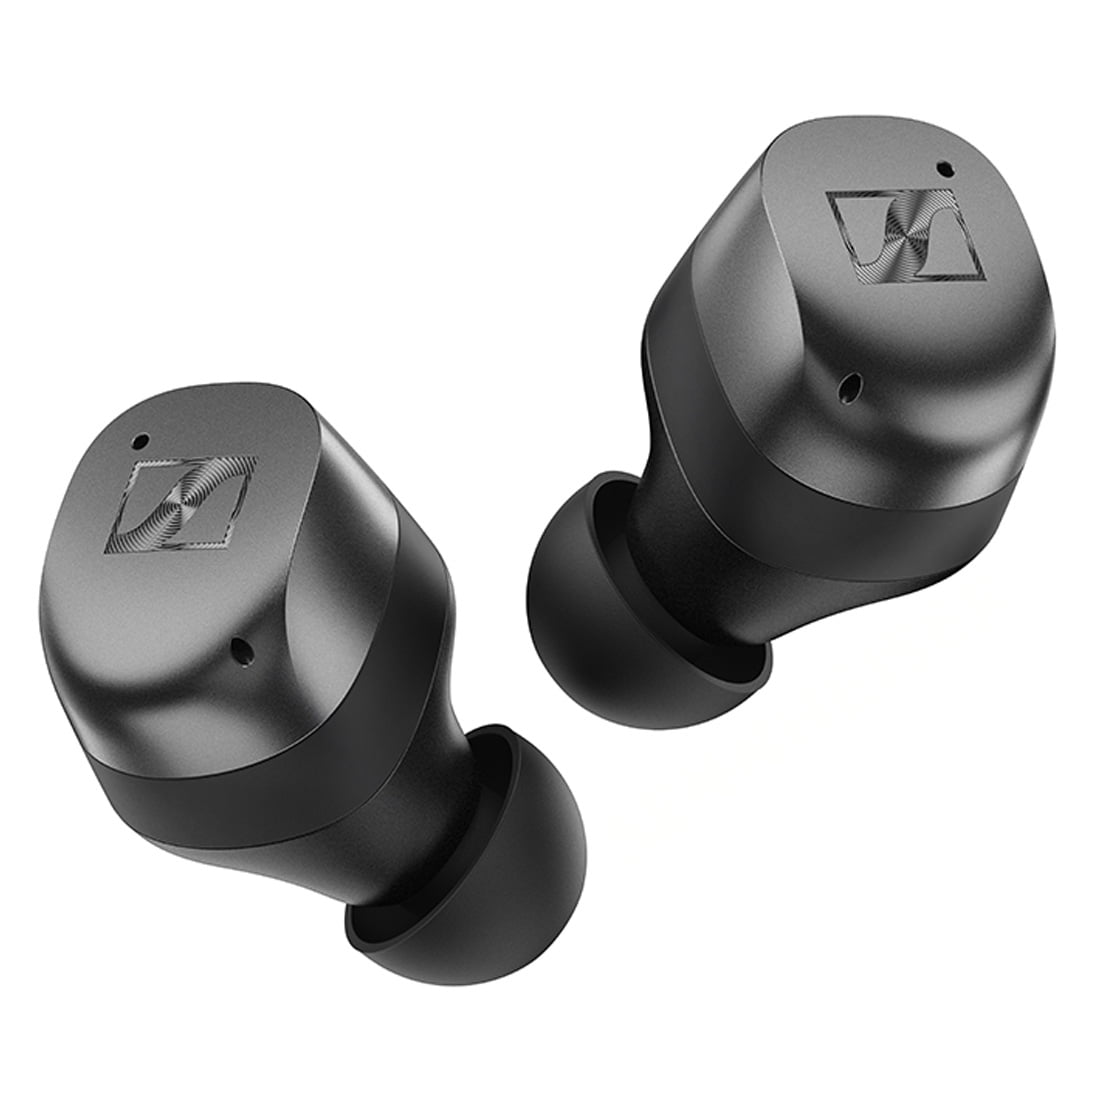 Sennheiser MTW3 Momentum True Wireless 3 In-Ear Headphones